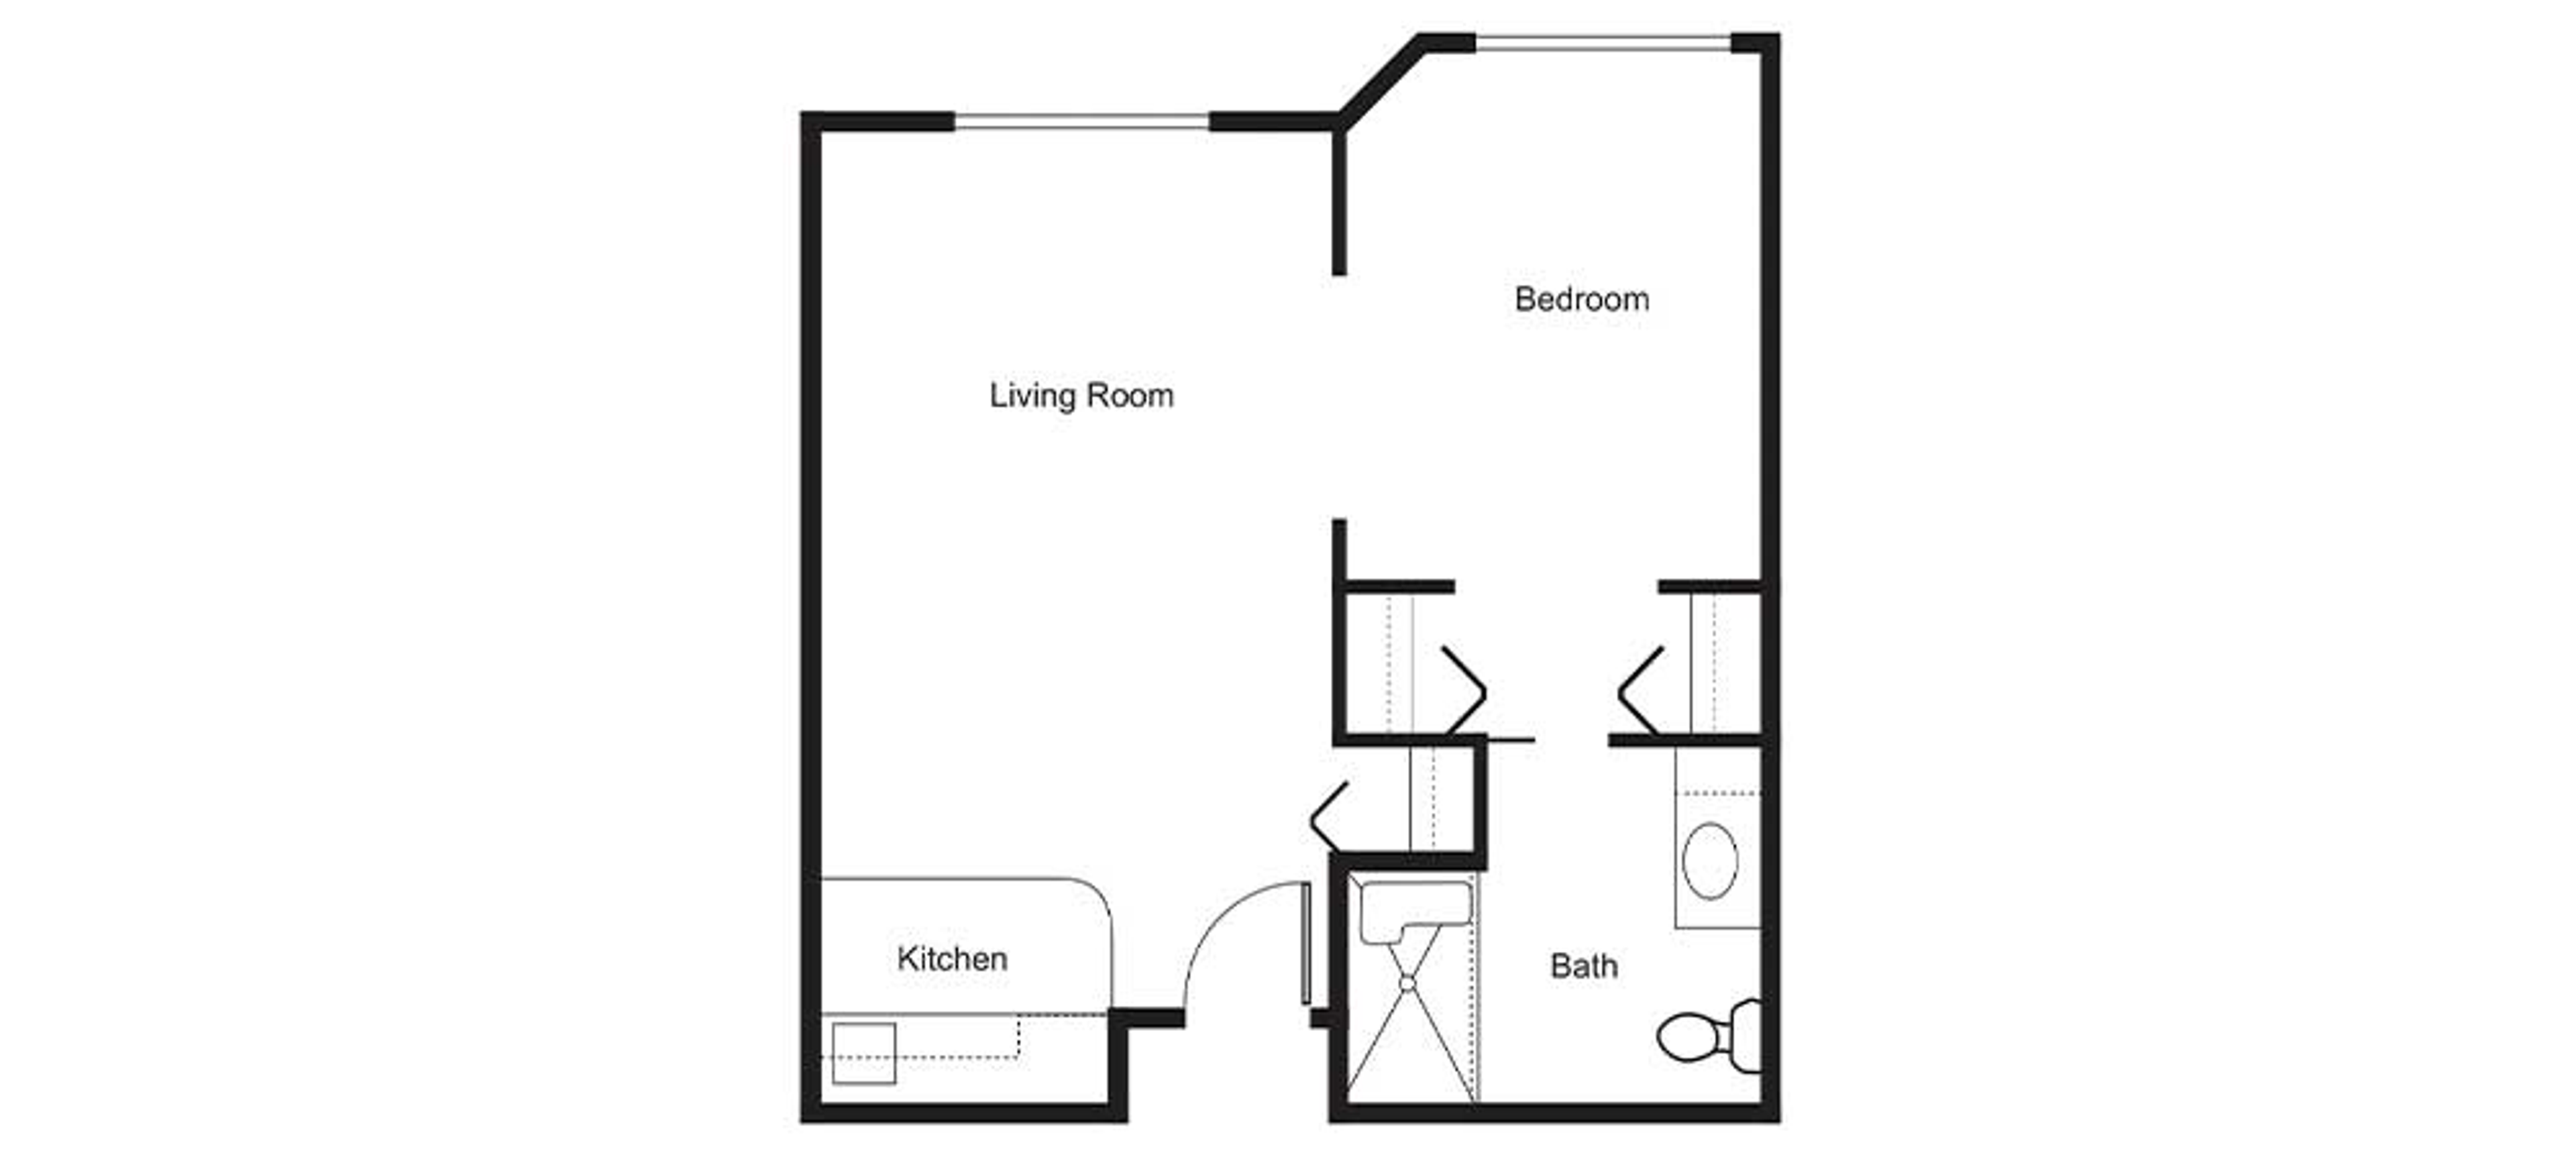 Floorplan - Edmonds Landing - 1B 1B Assisted Living 